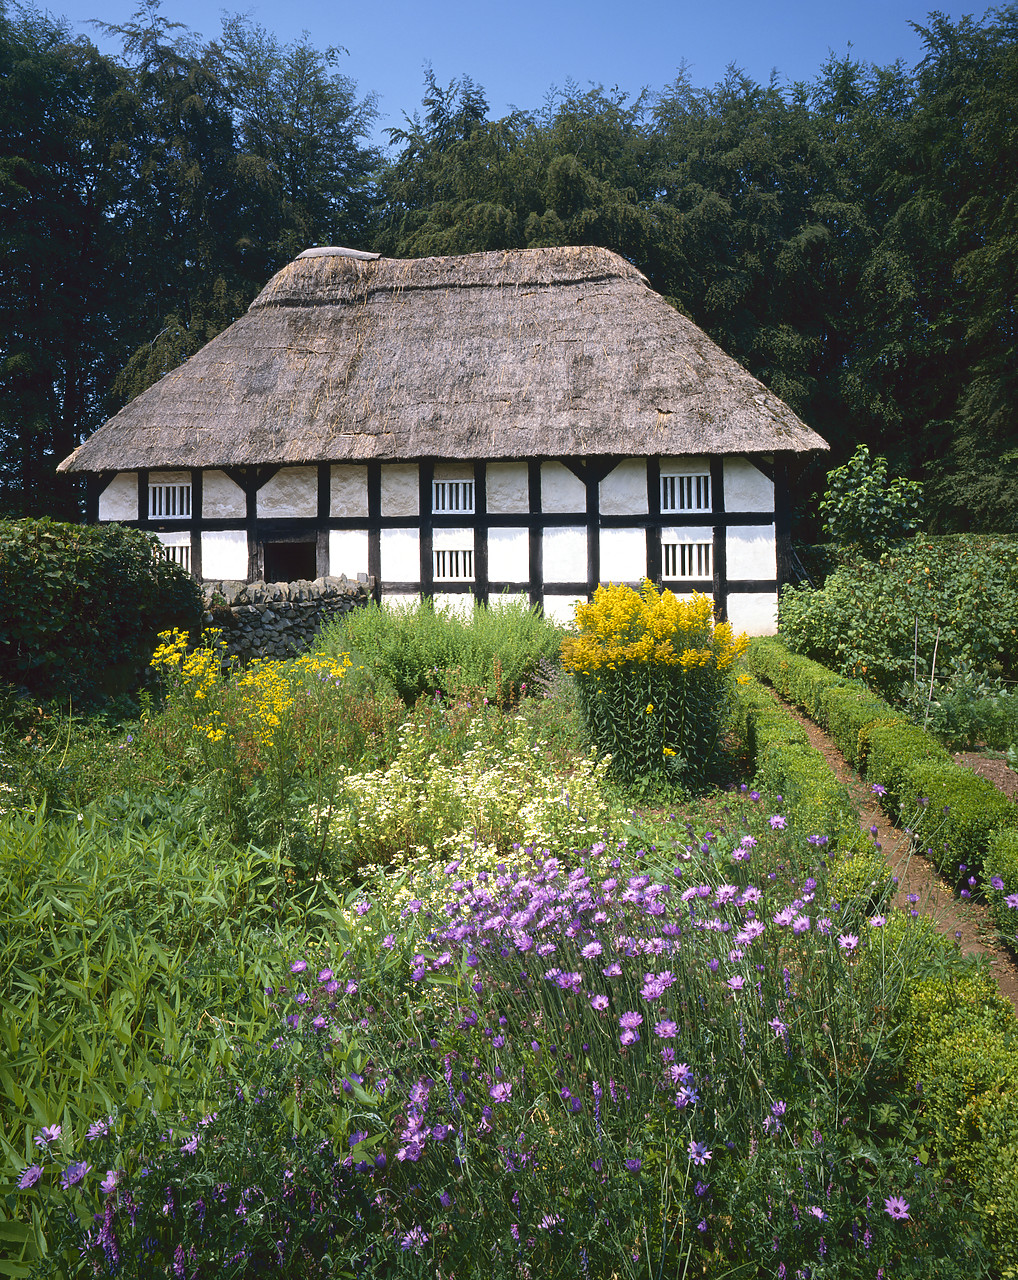 #903021-5 - Timber-framed Farmhouse, Welsh Folk Museum, St. Fagans, Cardiff, Wales